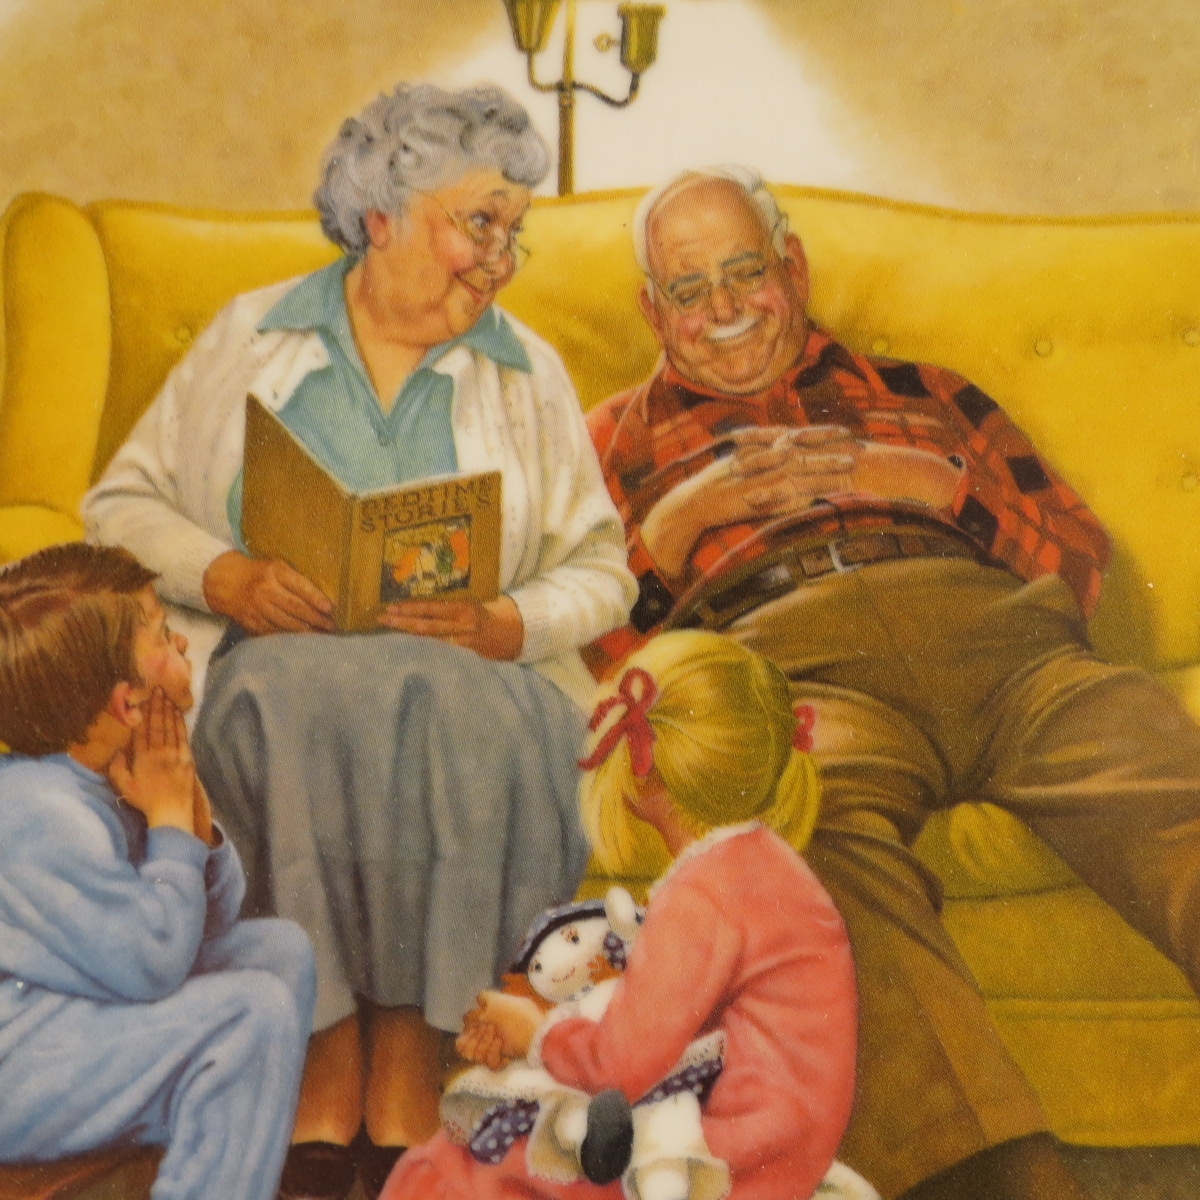 Наши мамы папы бабушки и деды. Бабушка и дедушка. Бабушка и дедушка с внуками. Дети с бабушкой и дедушкой. Пожилые люди иллюстрация.